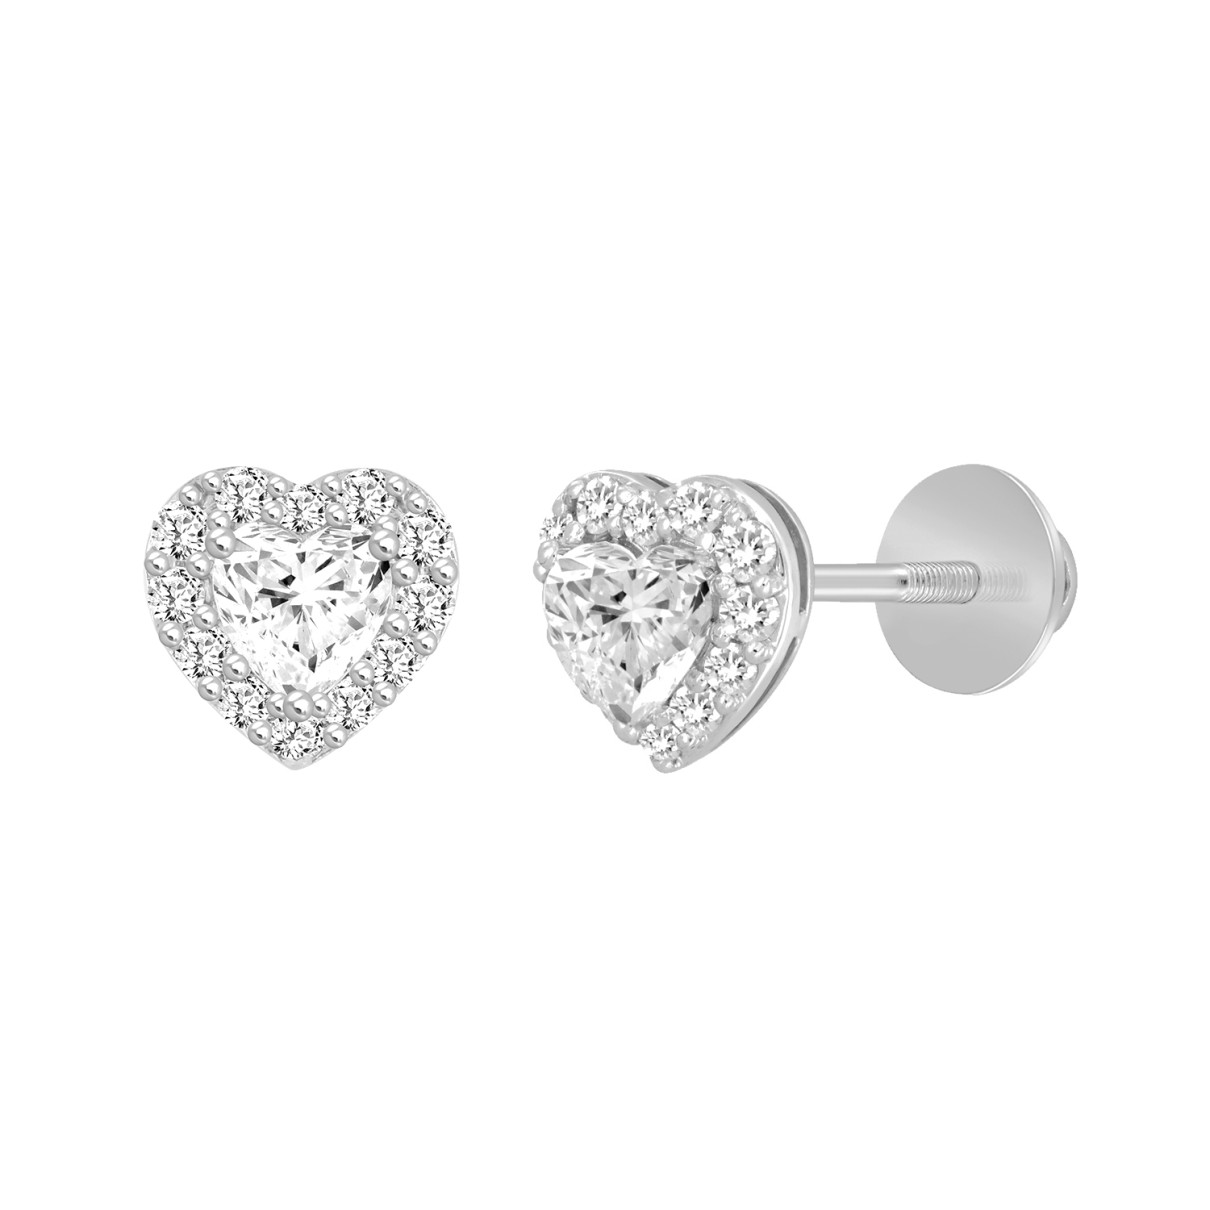 14K WHITE GOLD1 3/8CT ROUND / HEART DIAMOND LADIES EARRINGS (CENTER STONE HEART DIAMOND 1CT )